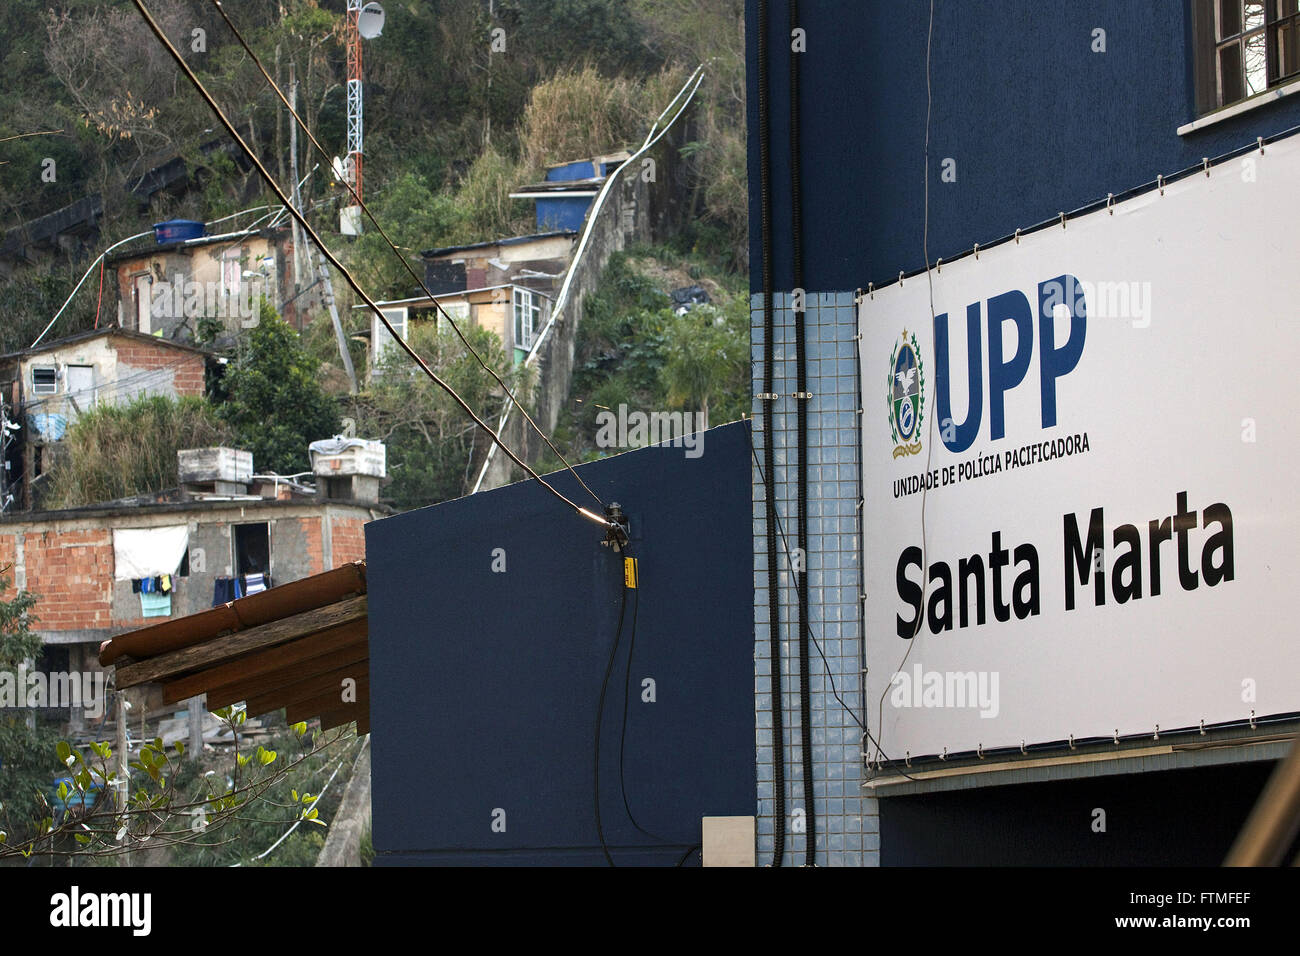 Plots of UPP - Unit Pacification Police in Favela Santa Marta in Morro Dona Marta Stock Photo